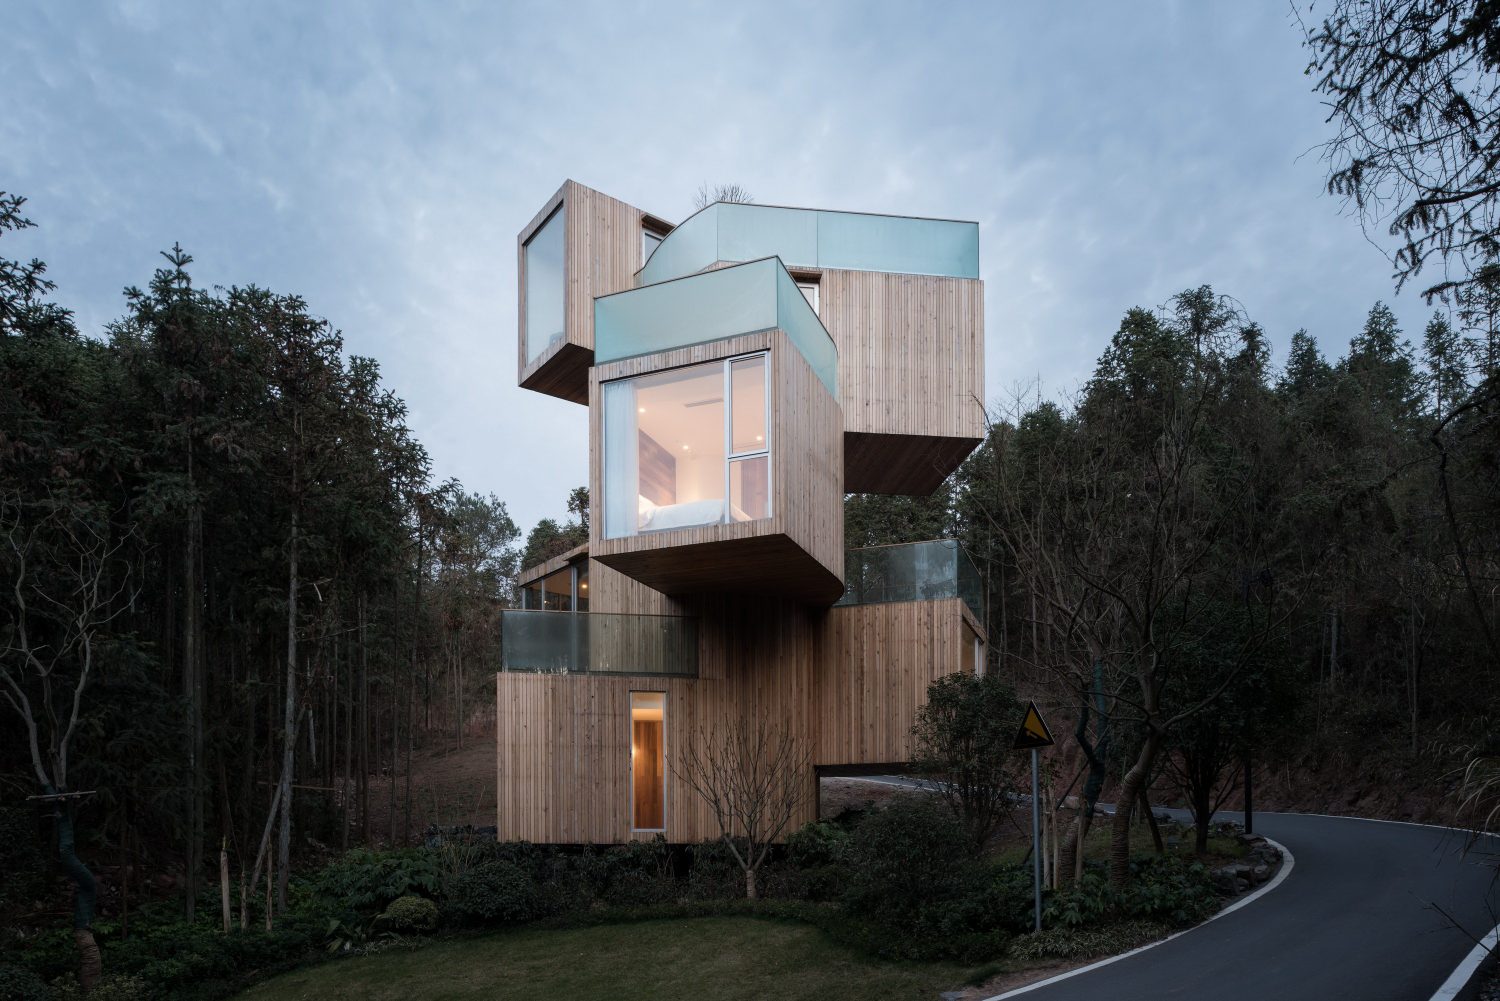 The Qiyun Mountain Tree House by Bengo Studio